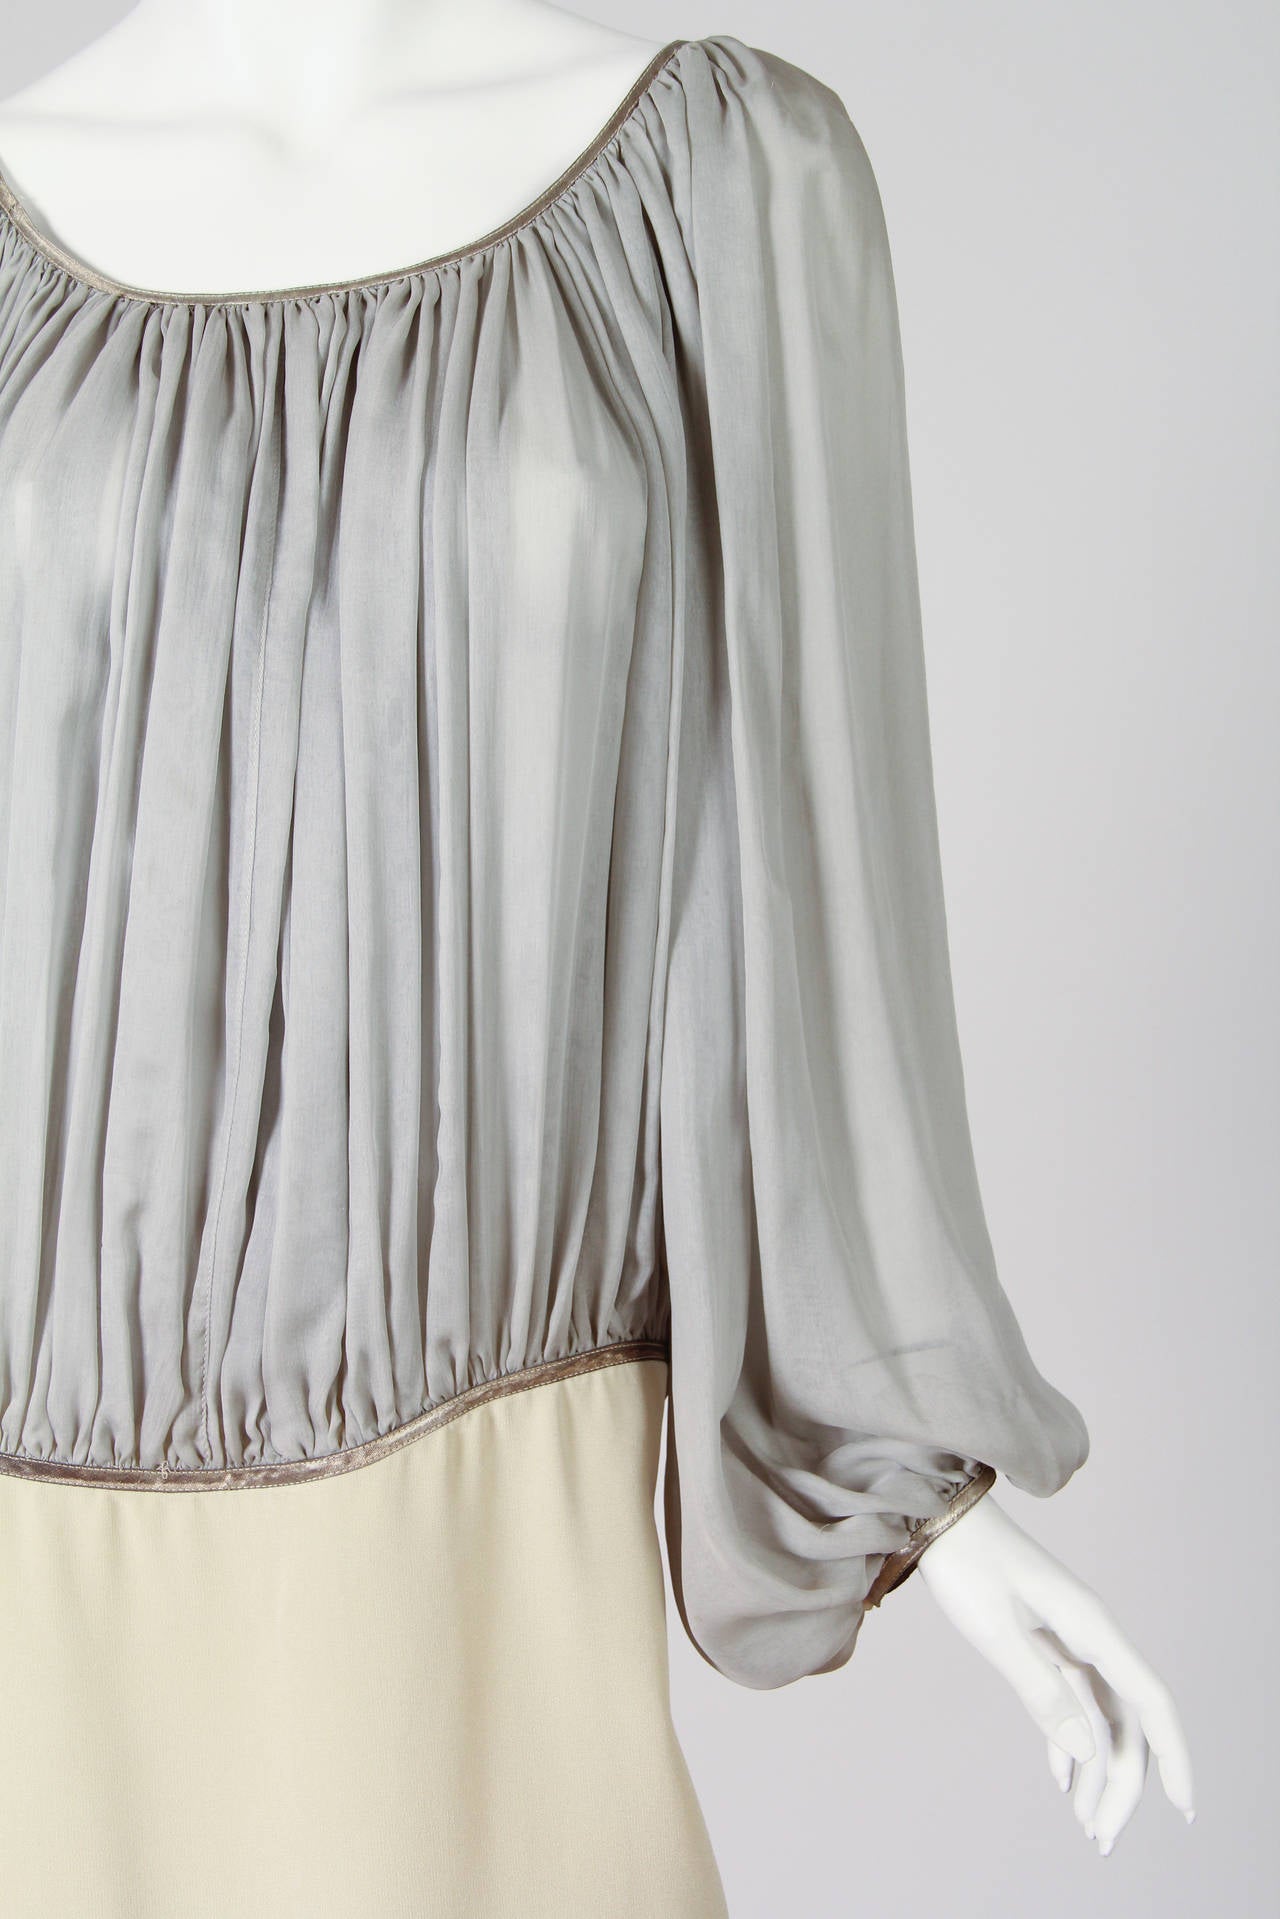 1980S GEOFFREY BEENE Cream & Grey Silk Chiffon Crepe Dress With Metallic Details 2